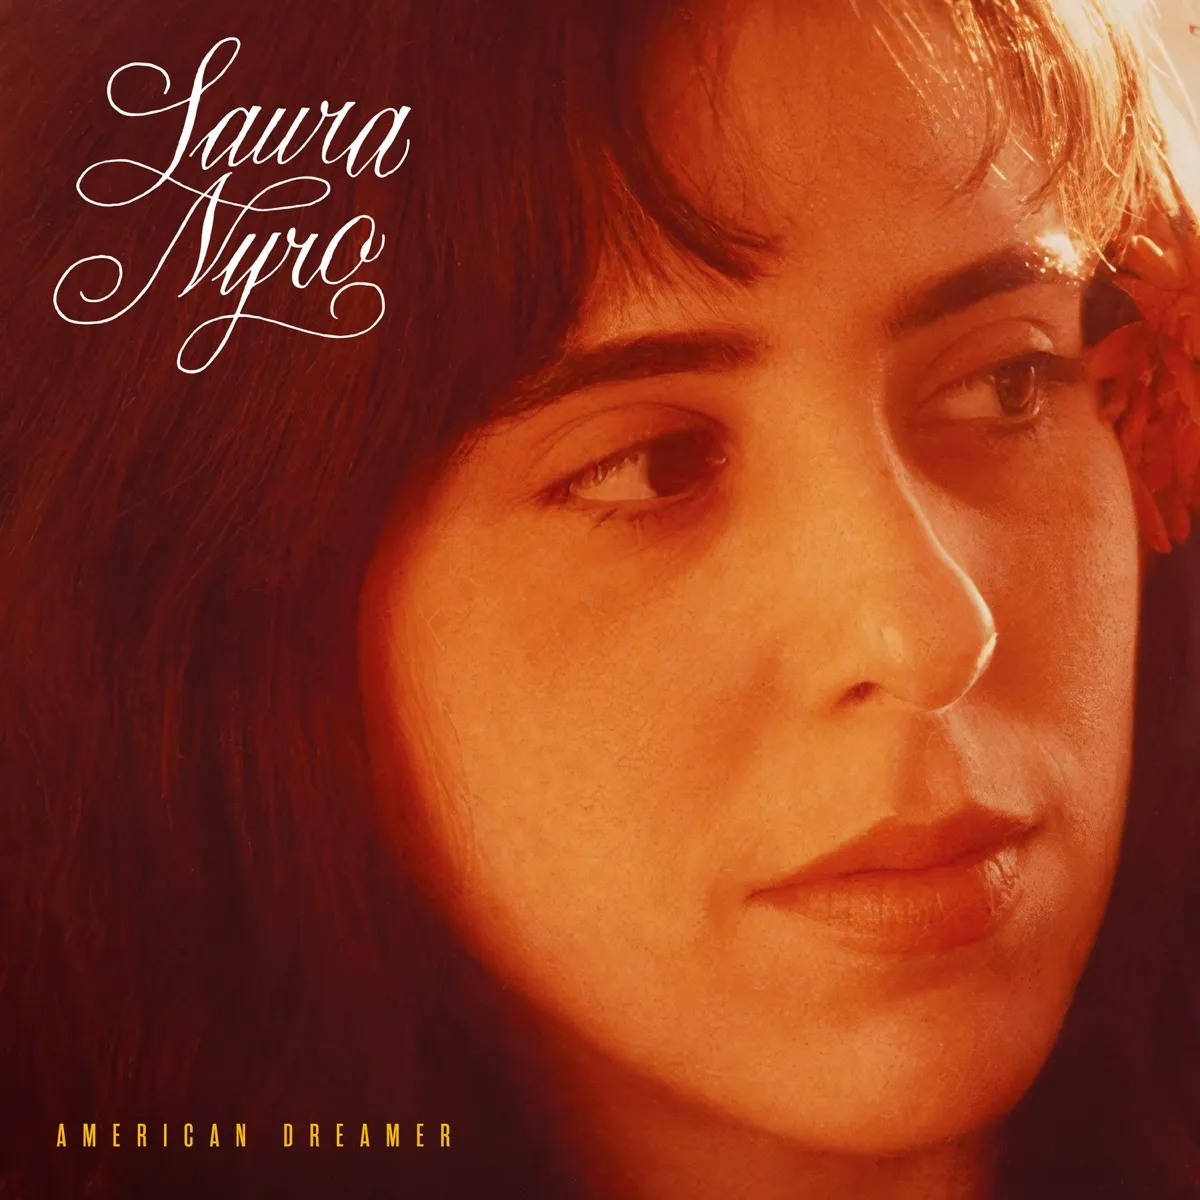 "American Dreamer" by Laura Nyro album cover